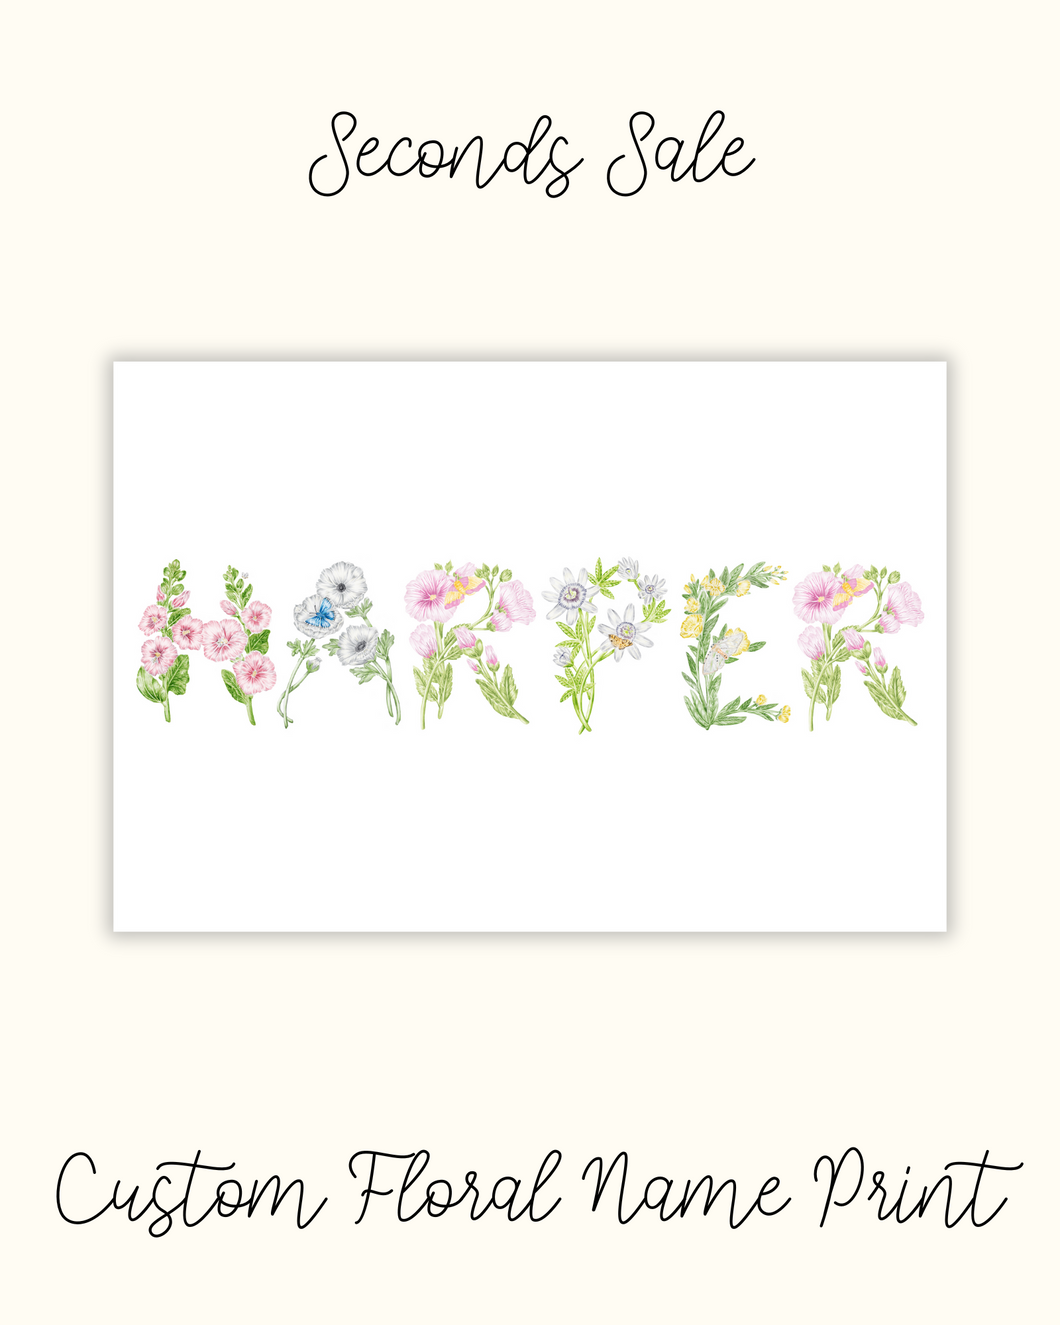 Custom Floral Name Print - Seconds Sale